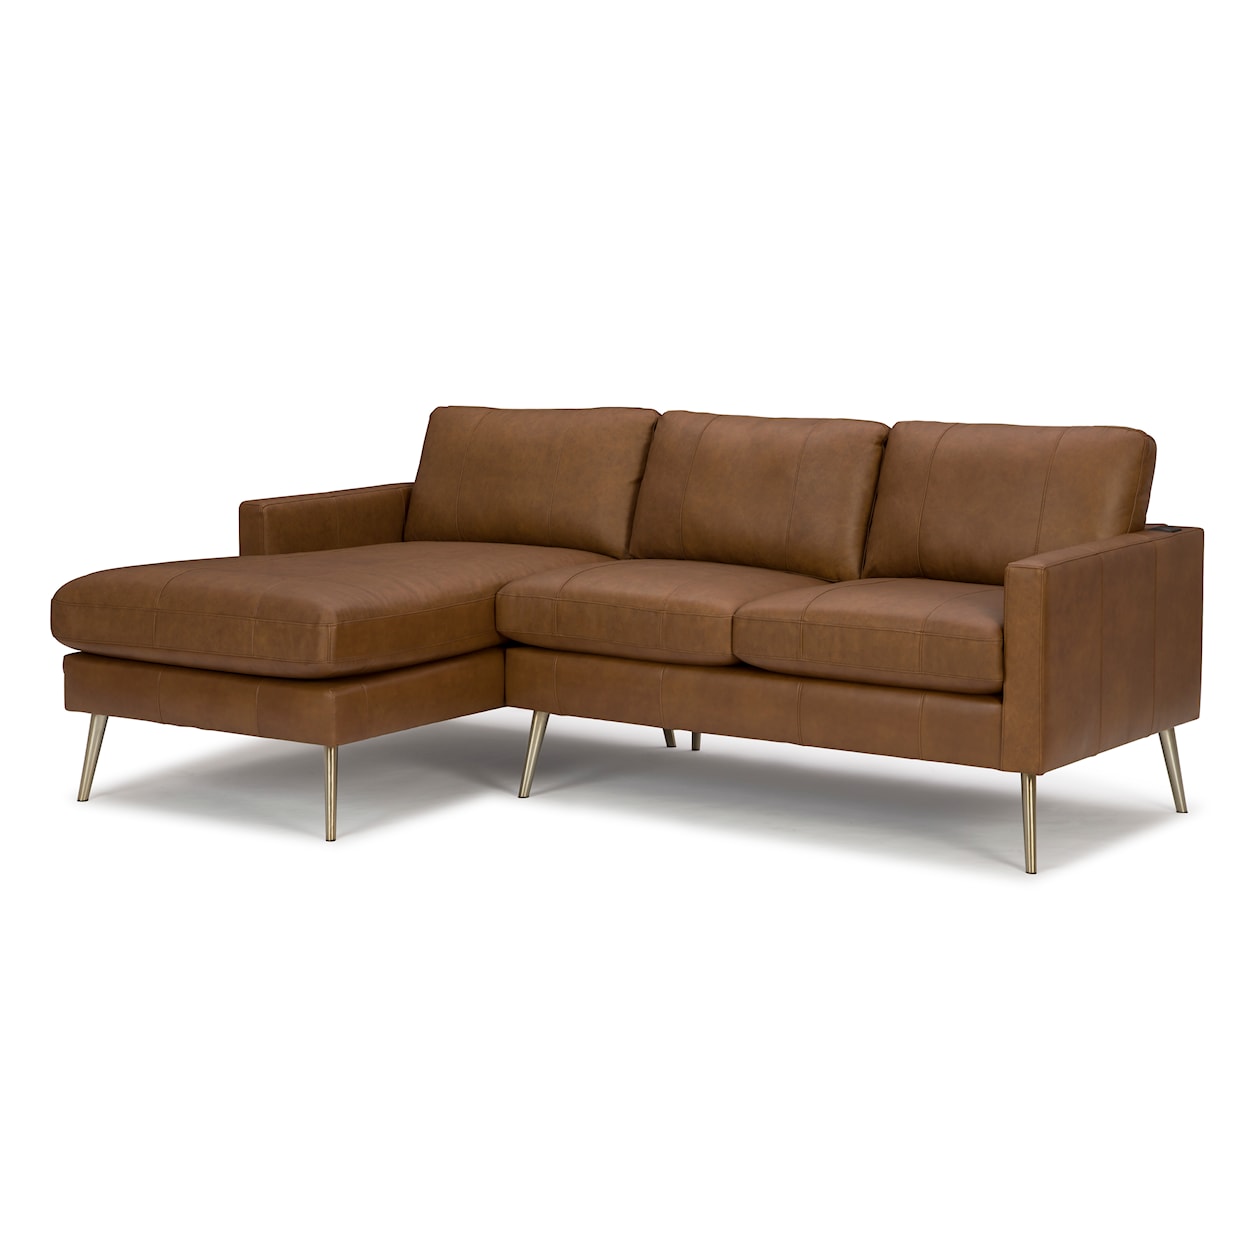 Bravo Furniture Trafton Leather Chaise Sofa w/ USB Port & Metal Feet